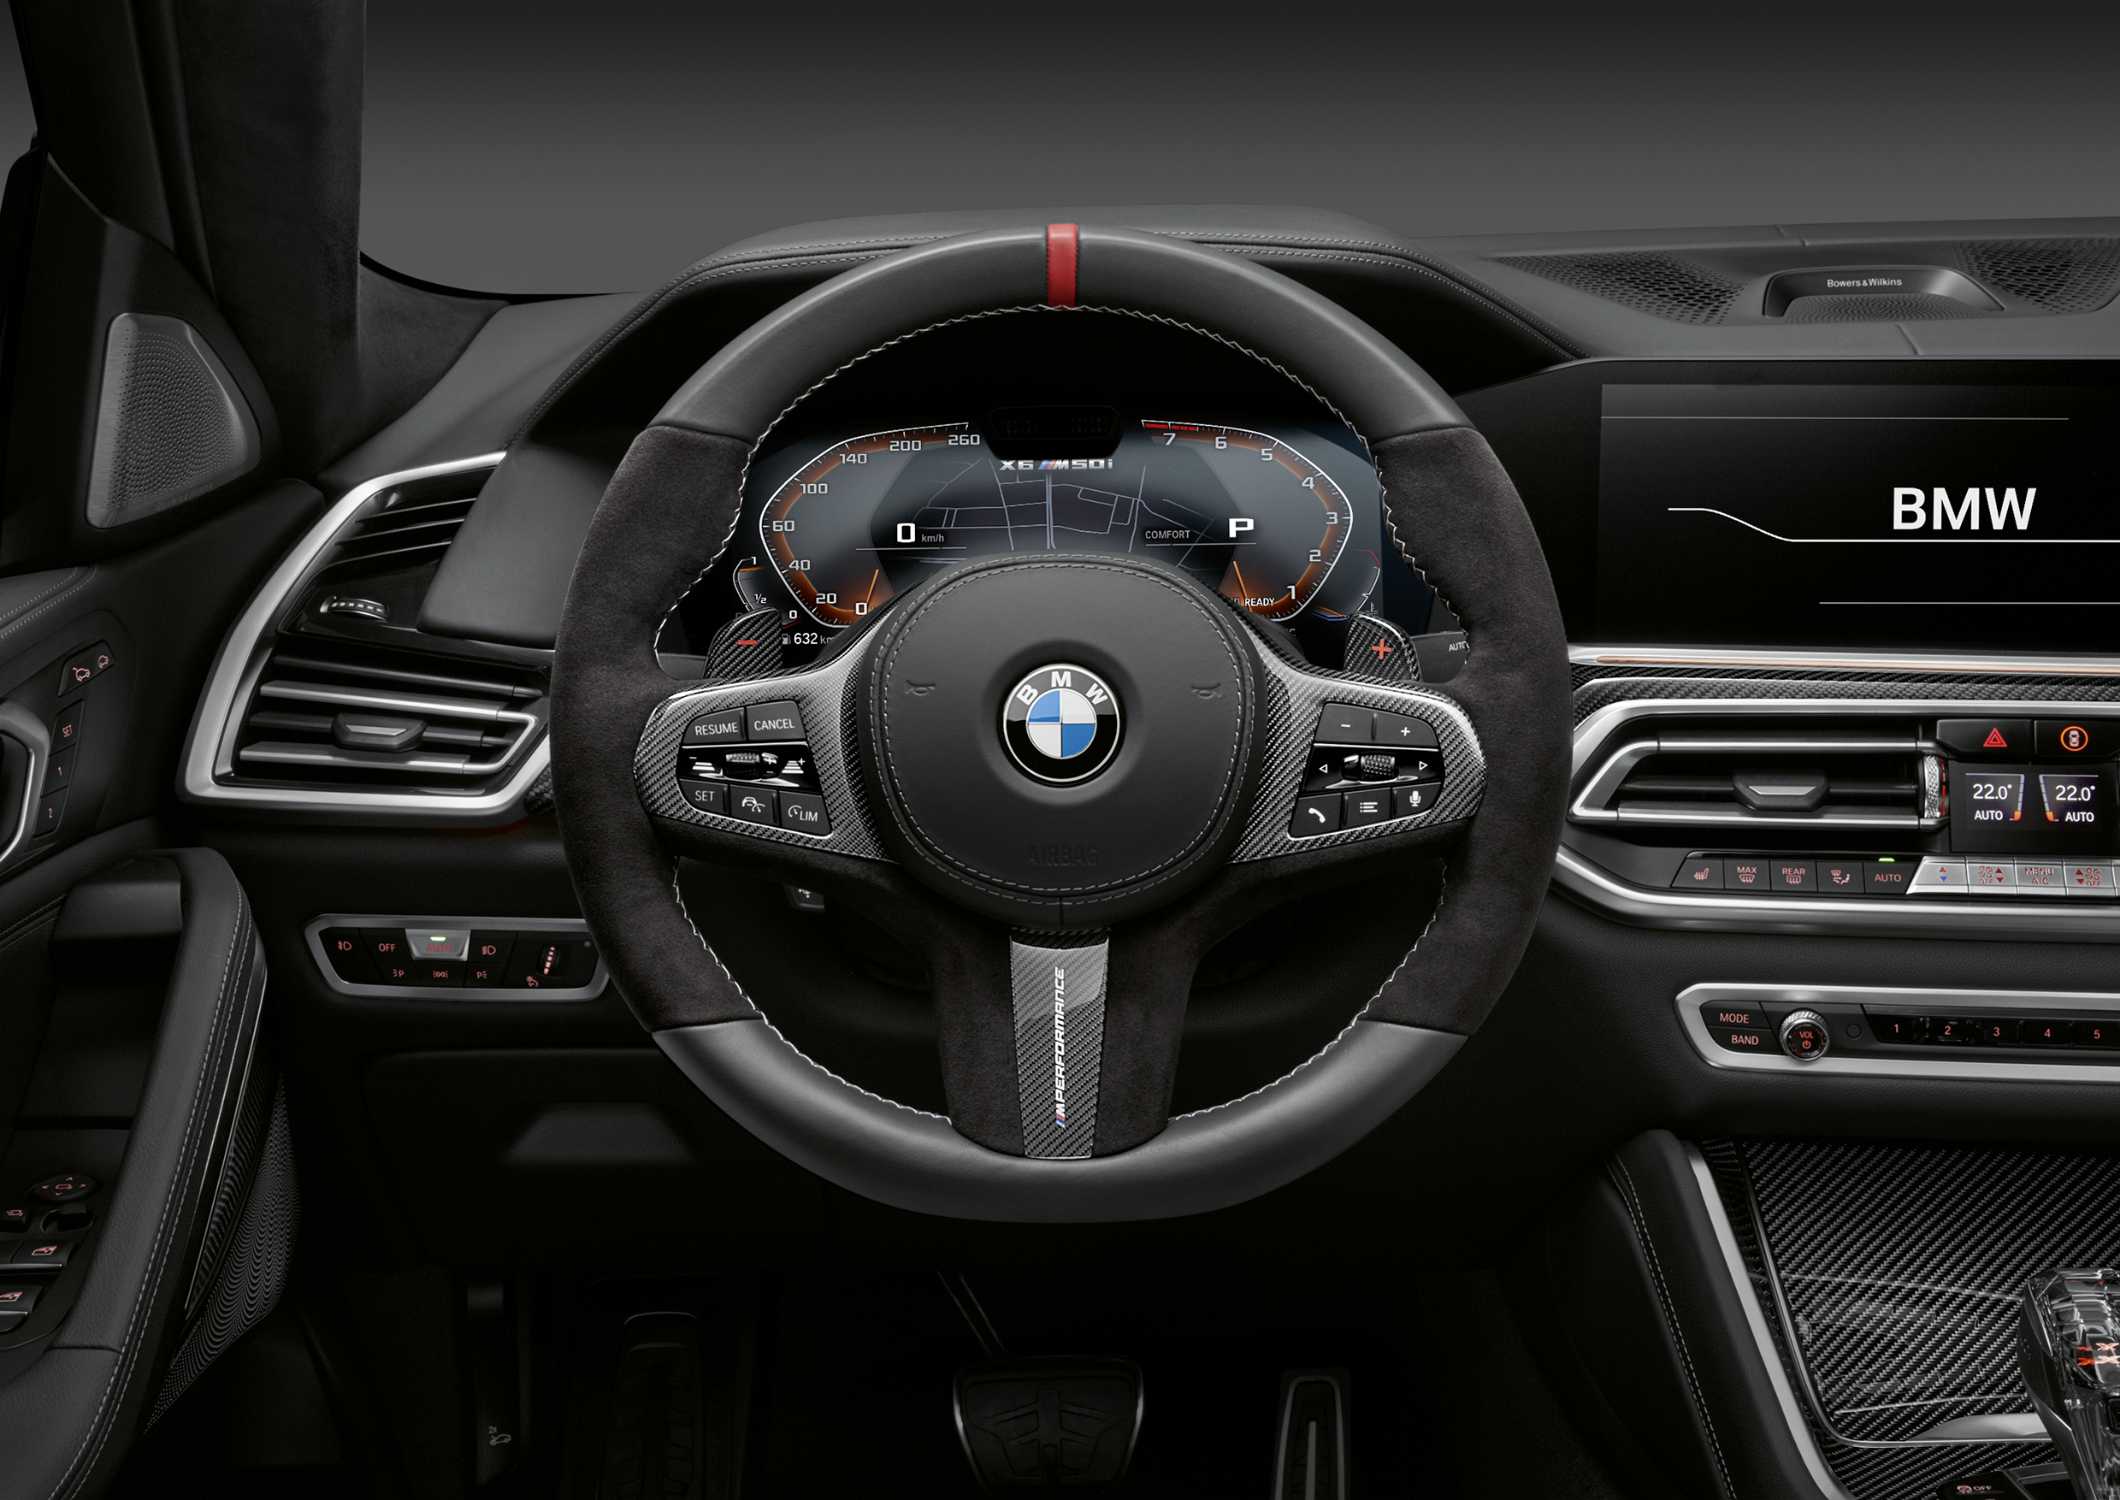 Foto: BMW X6 xDrive35i mit BMW M Performance Lenkradkranz in